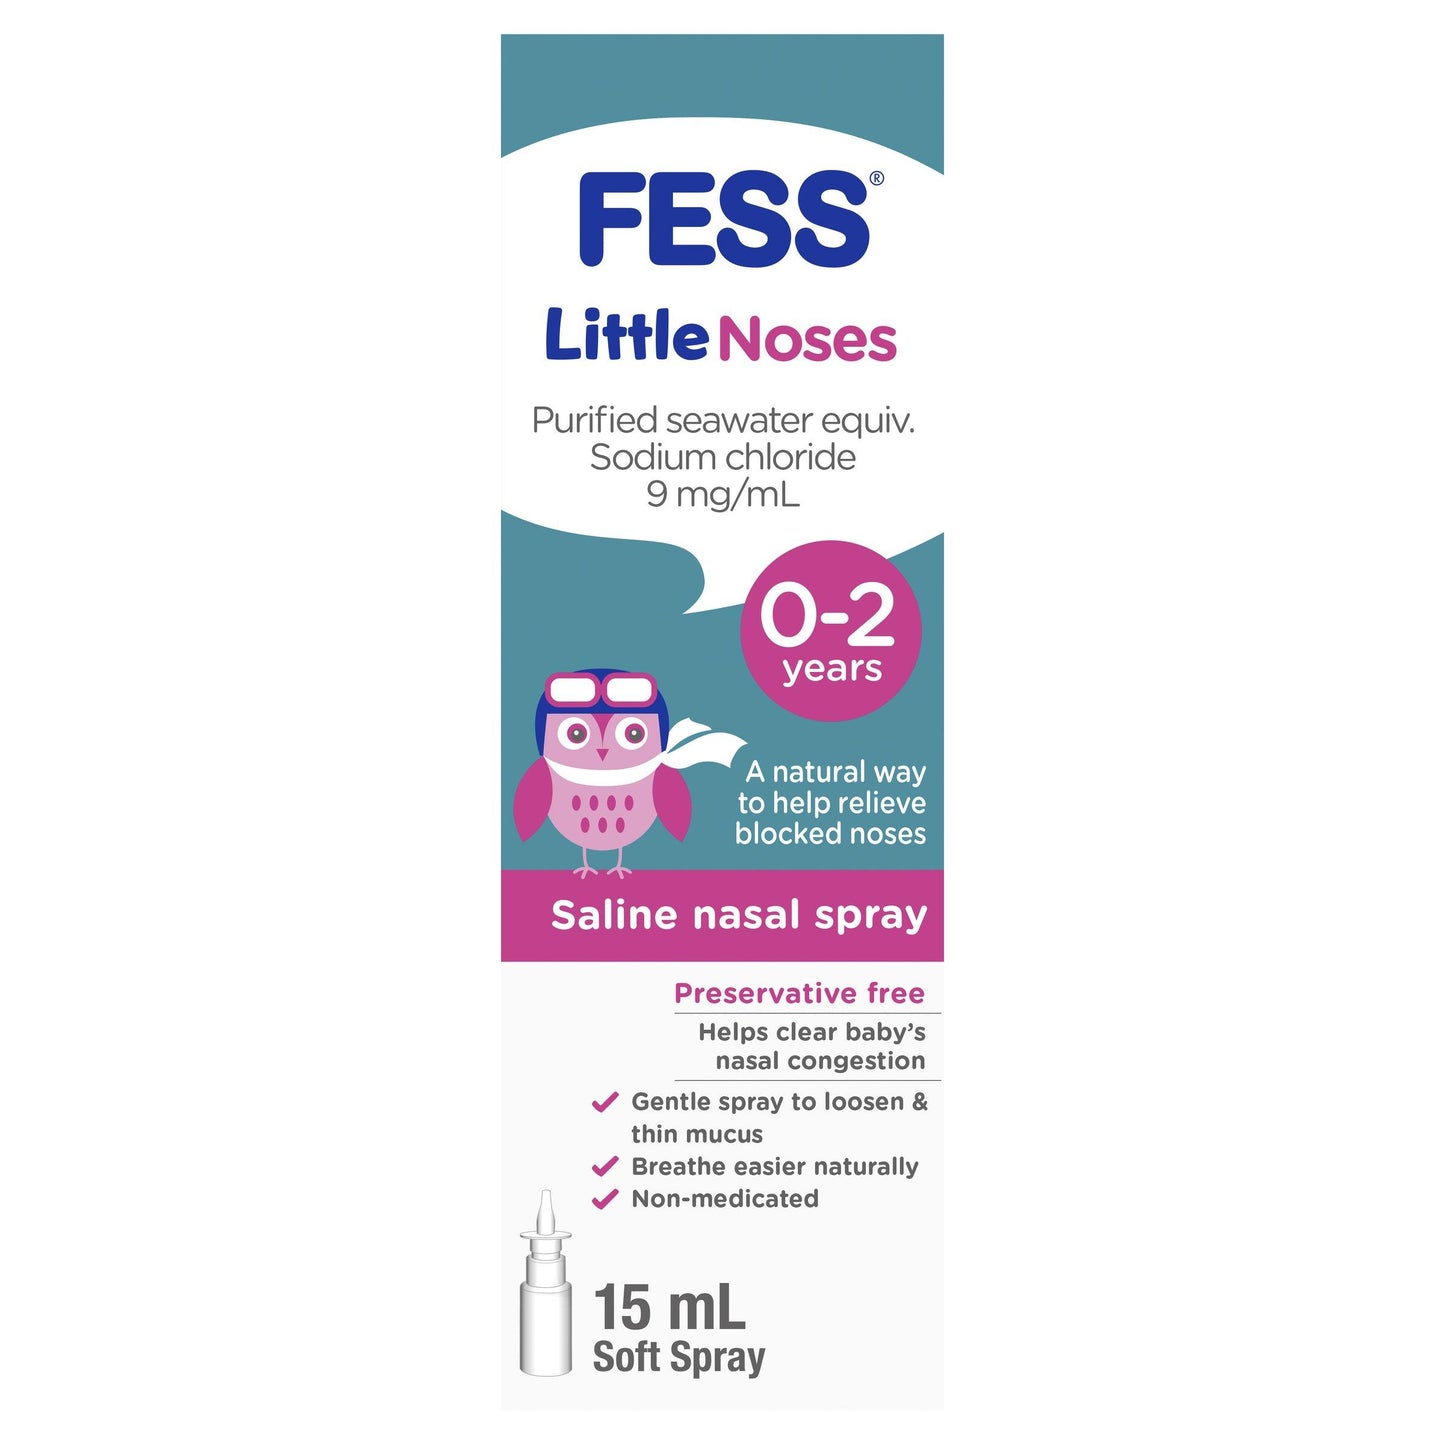 FESS Little Noses saline nasal spray 15ml for 0-2 years